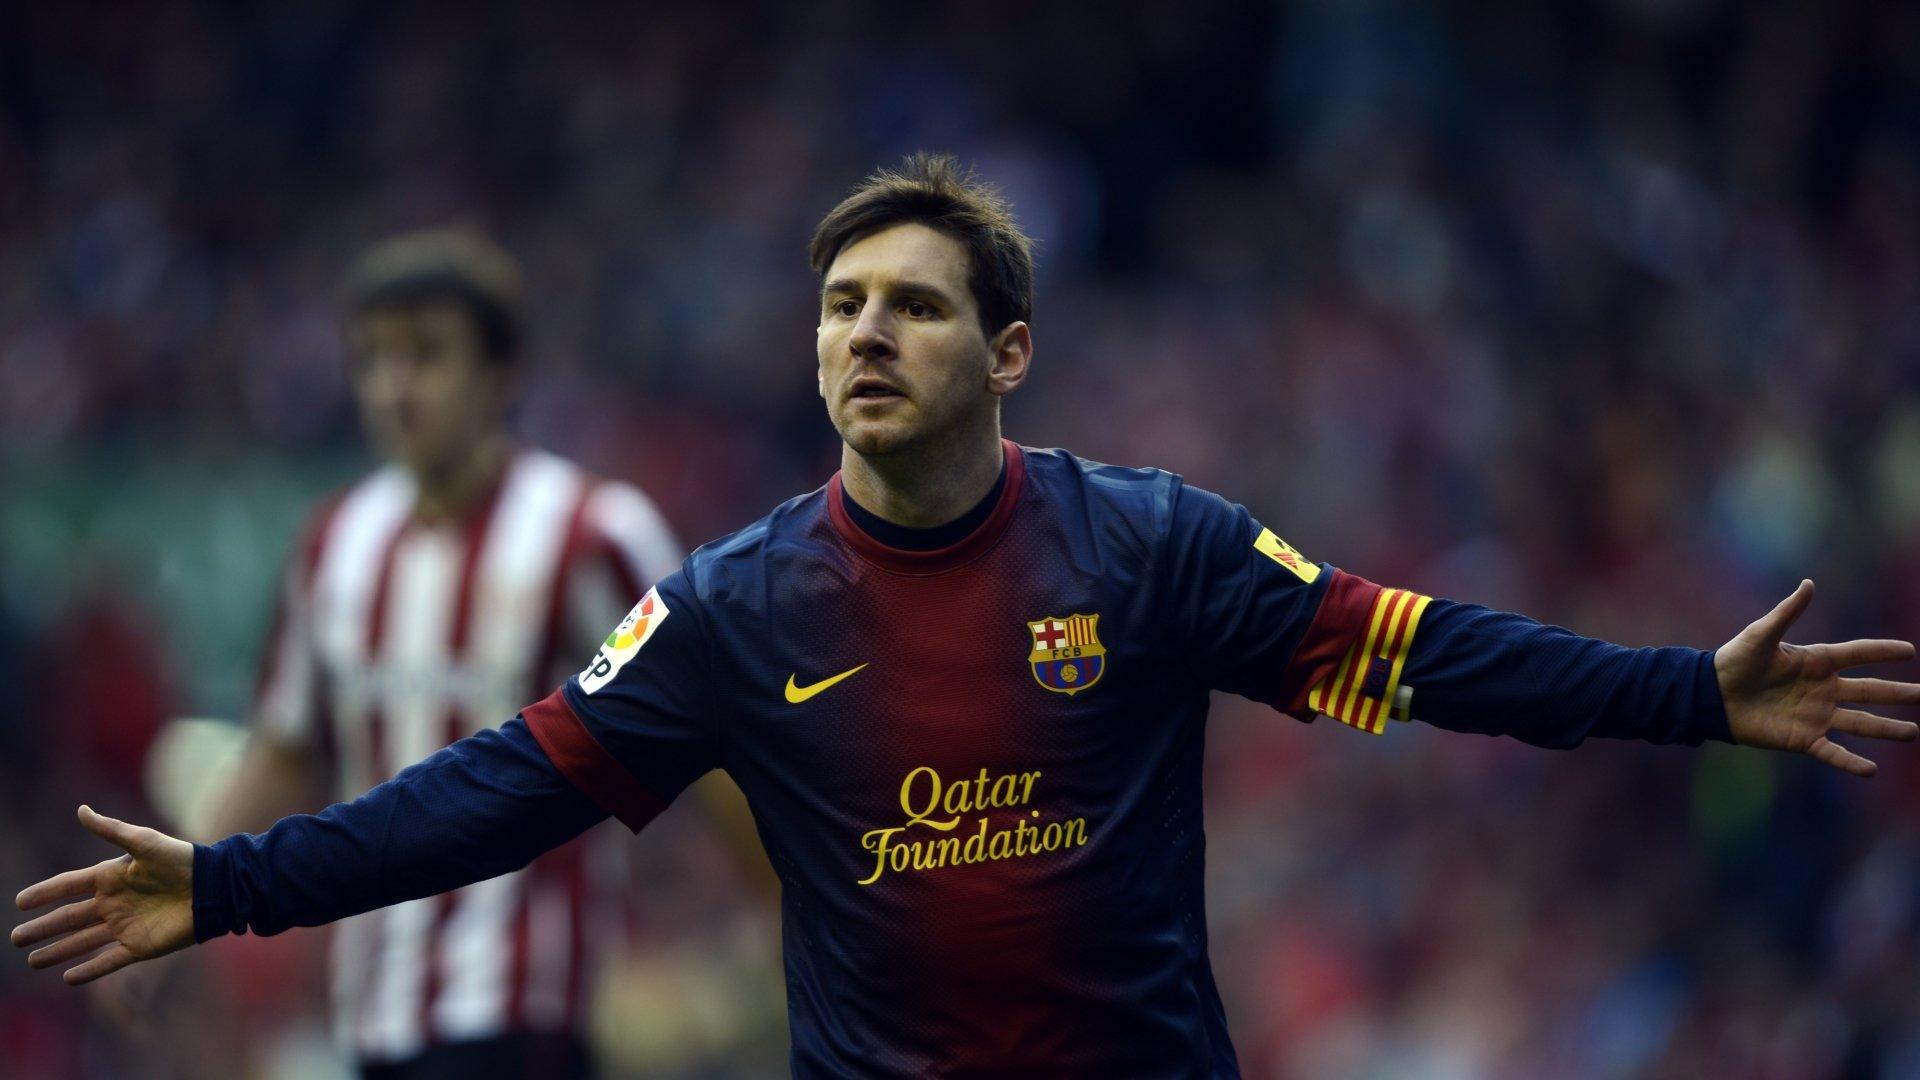 4K Ultra HD Lionel Messi Wallpaper